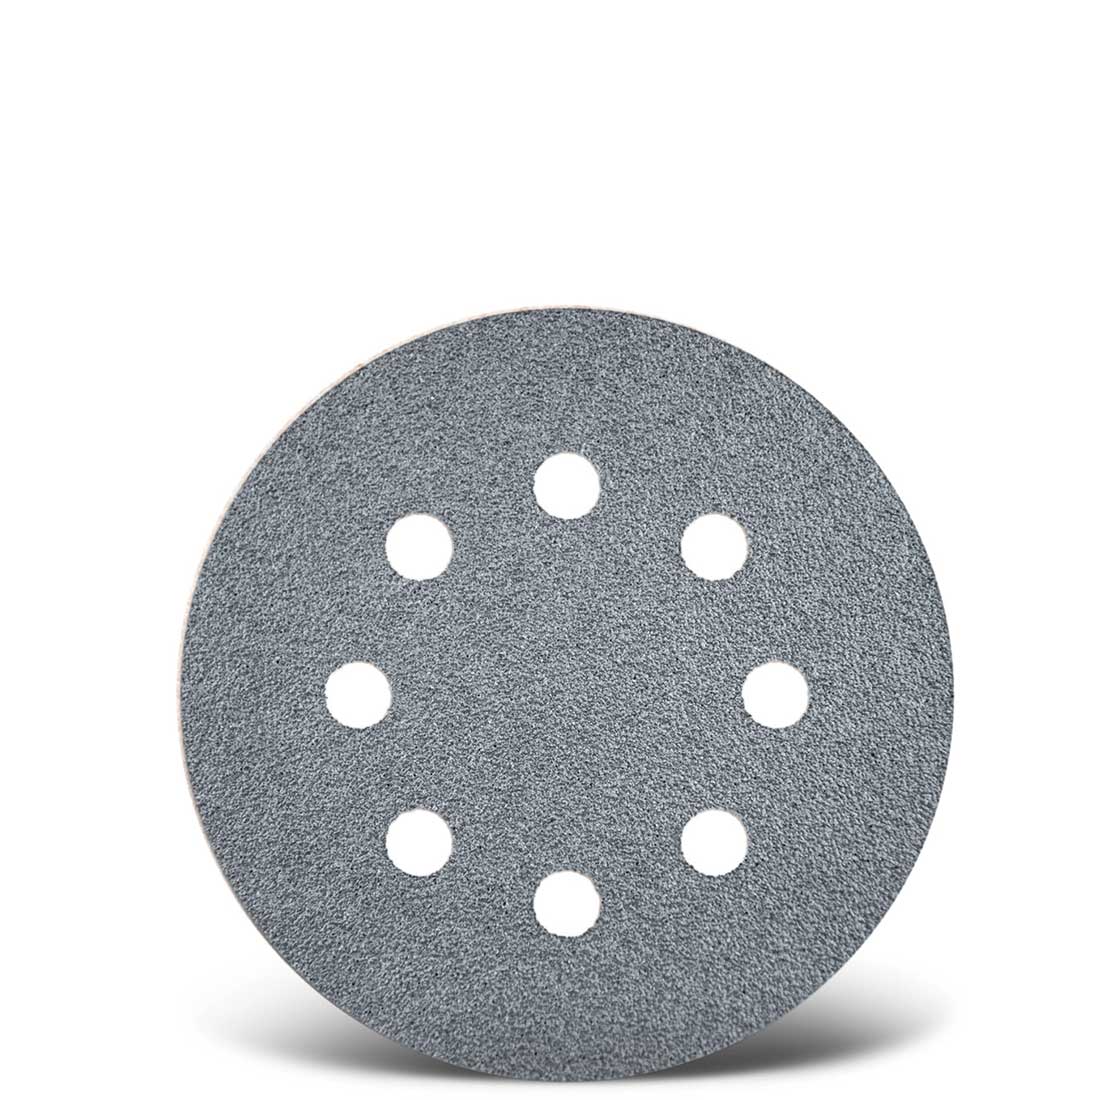 MENZER hook & loop sanding discs for random orbital sanders, G40–400, Ø 115 mm / 8 hole / semi-friable aluminium oxide